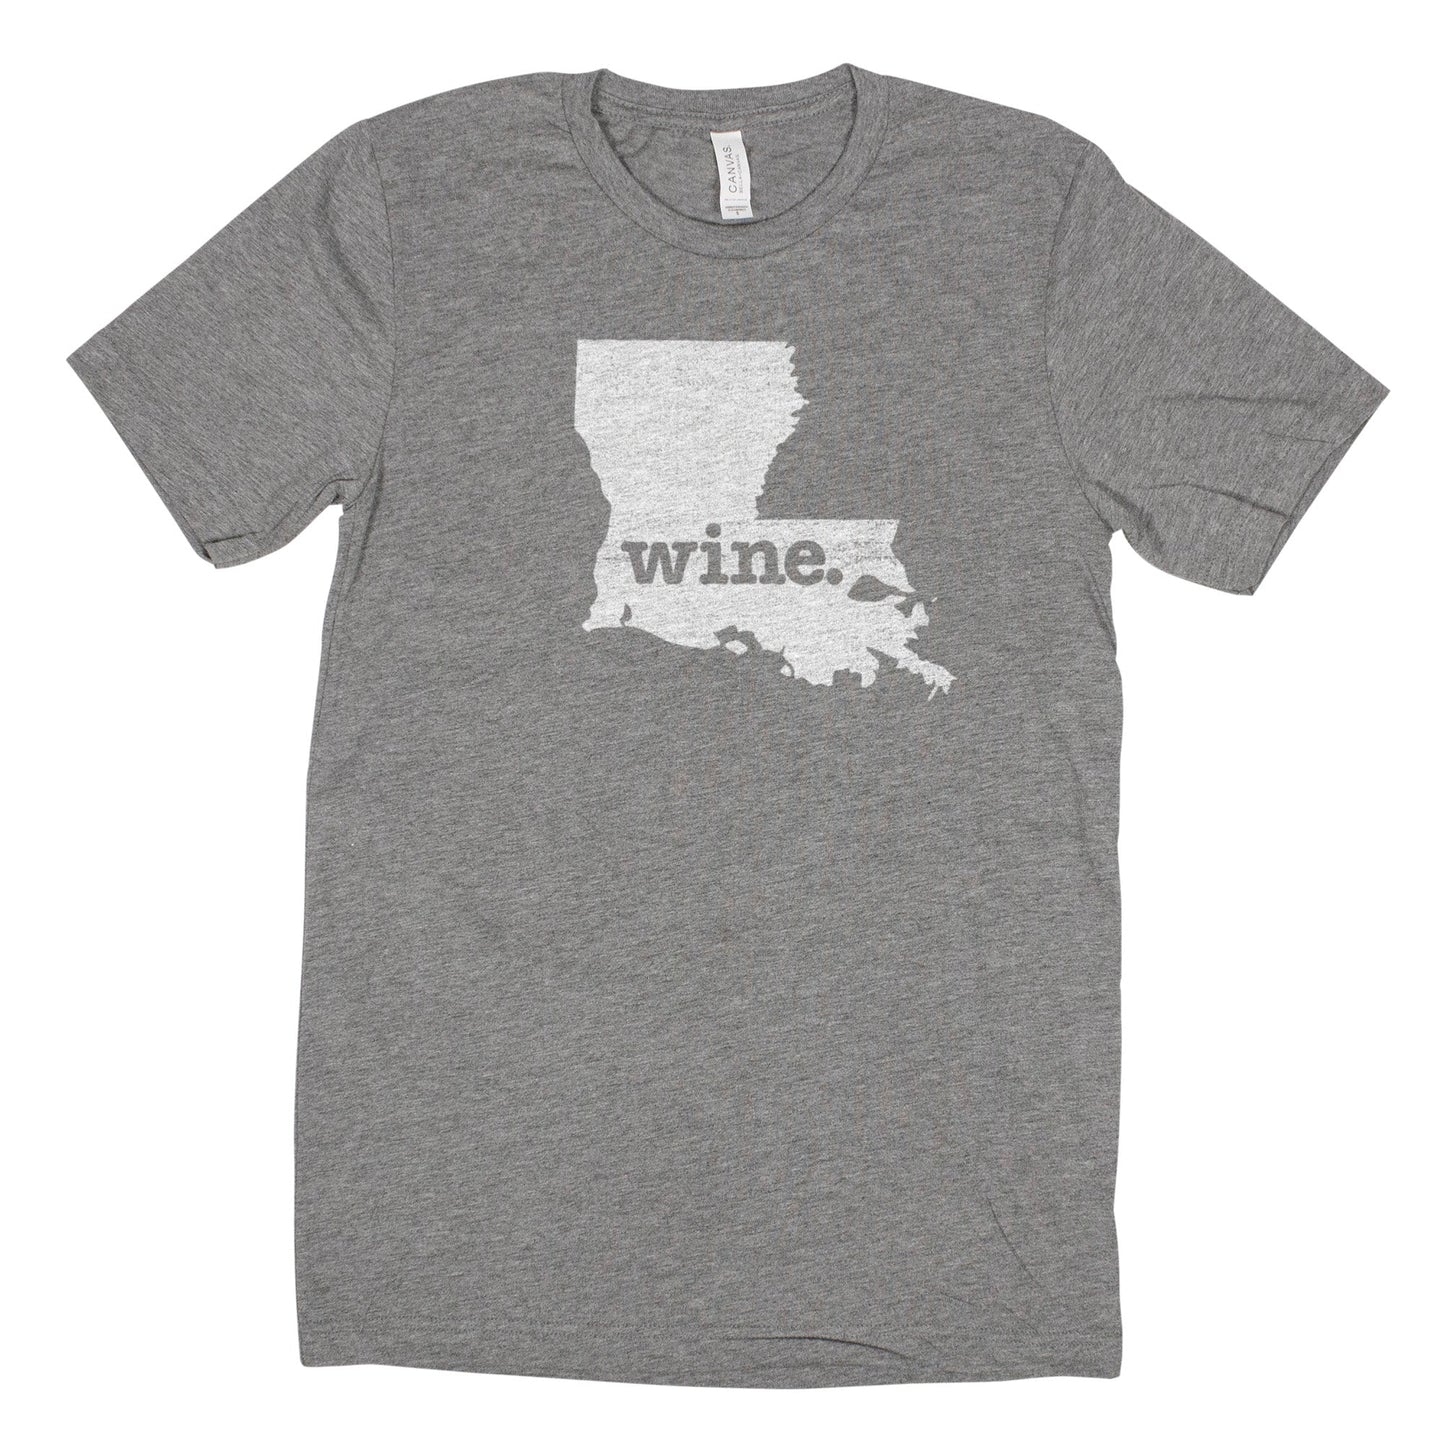 wine. Men's Unisex T-Shirt - Louisiana